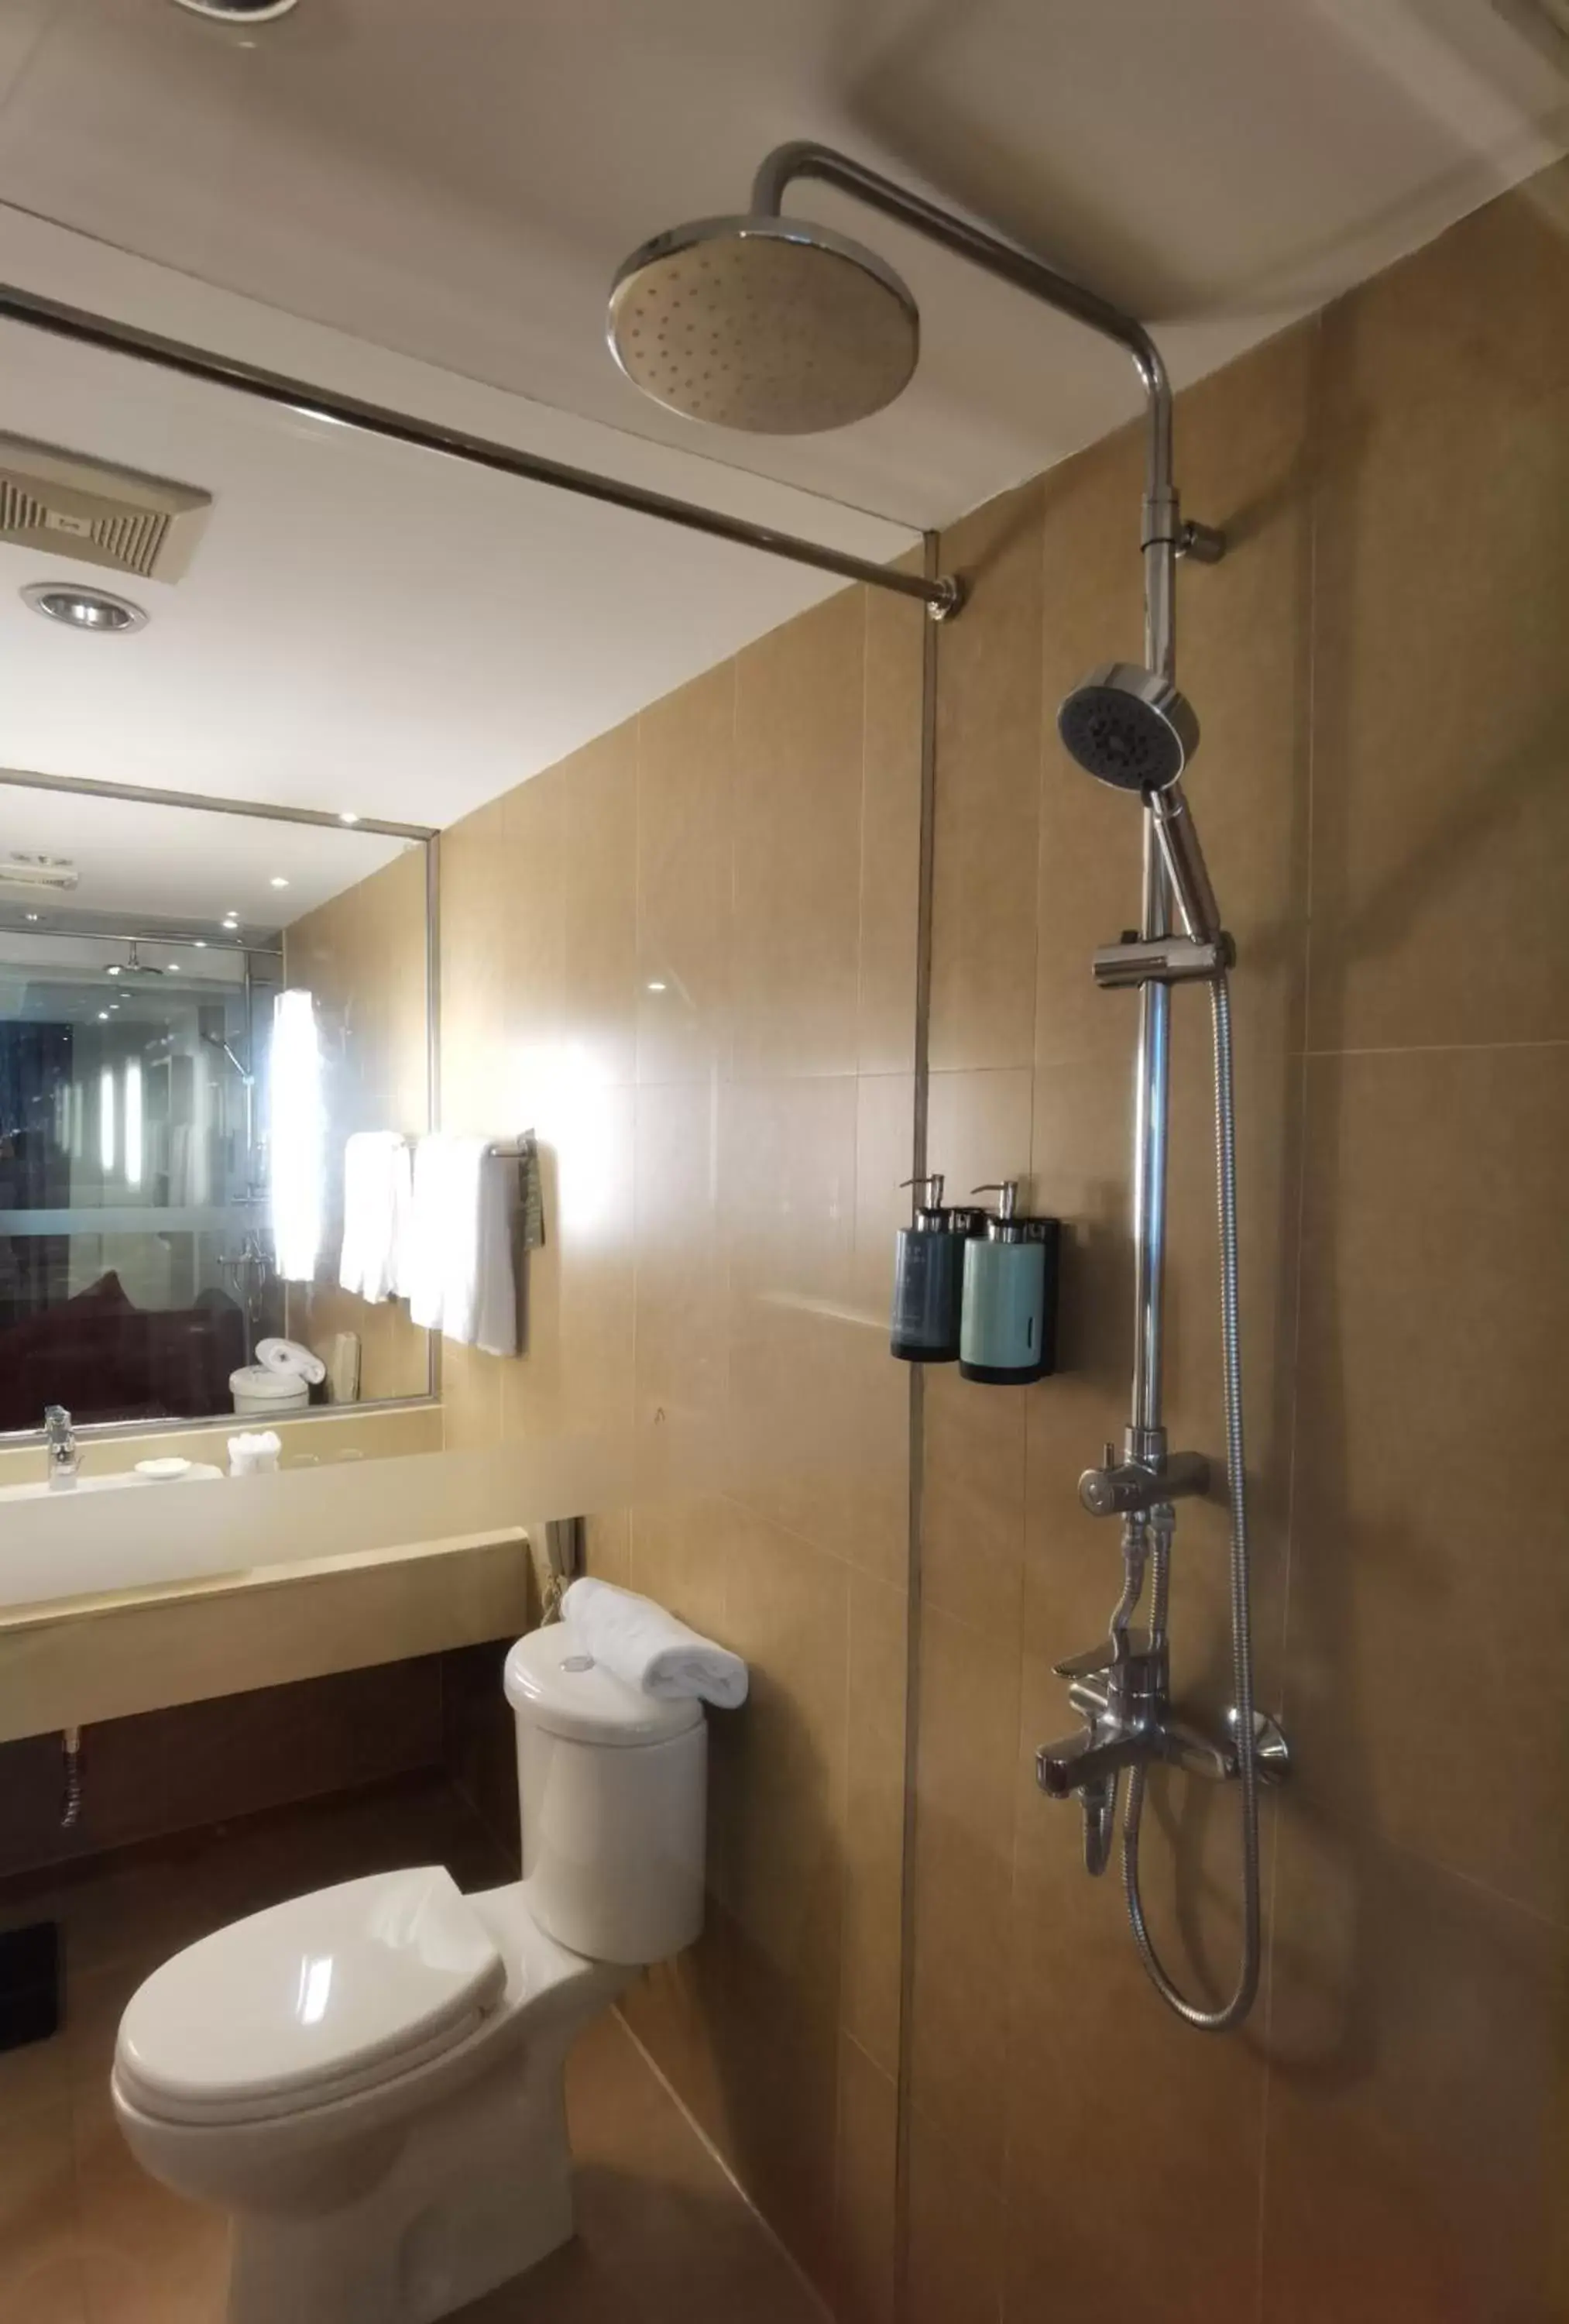 Toilet, Bathroom in Shenzhen Novotel Watergate(Kingkey 100)